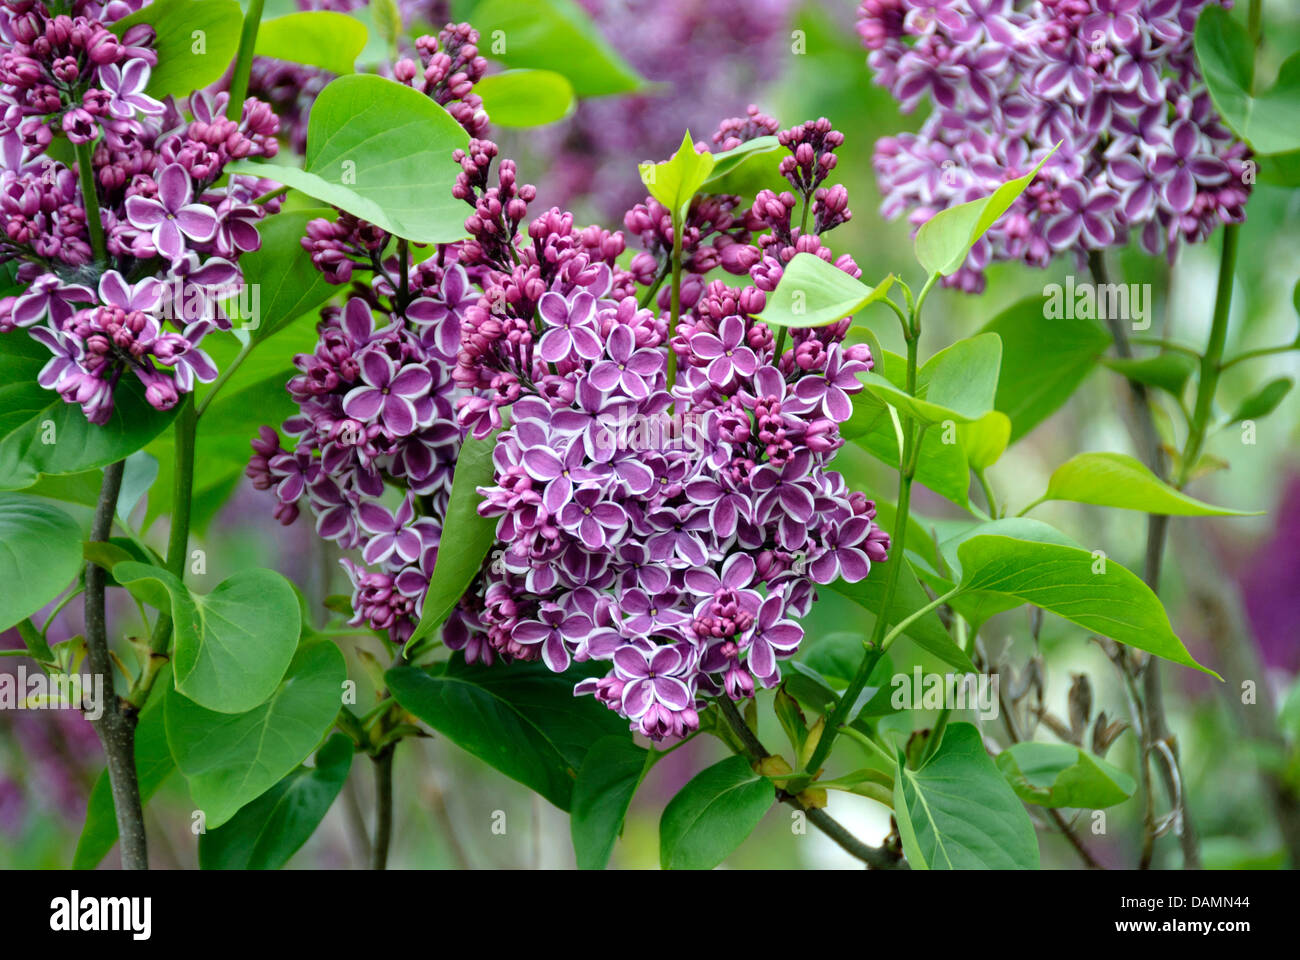 common lilac (Syringa vulgaris 'Sensation', Syringa vulgaris Sensation), cultivar Sensation Stock Photo